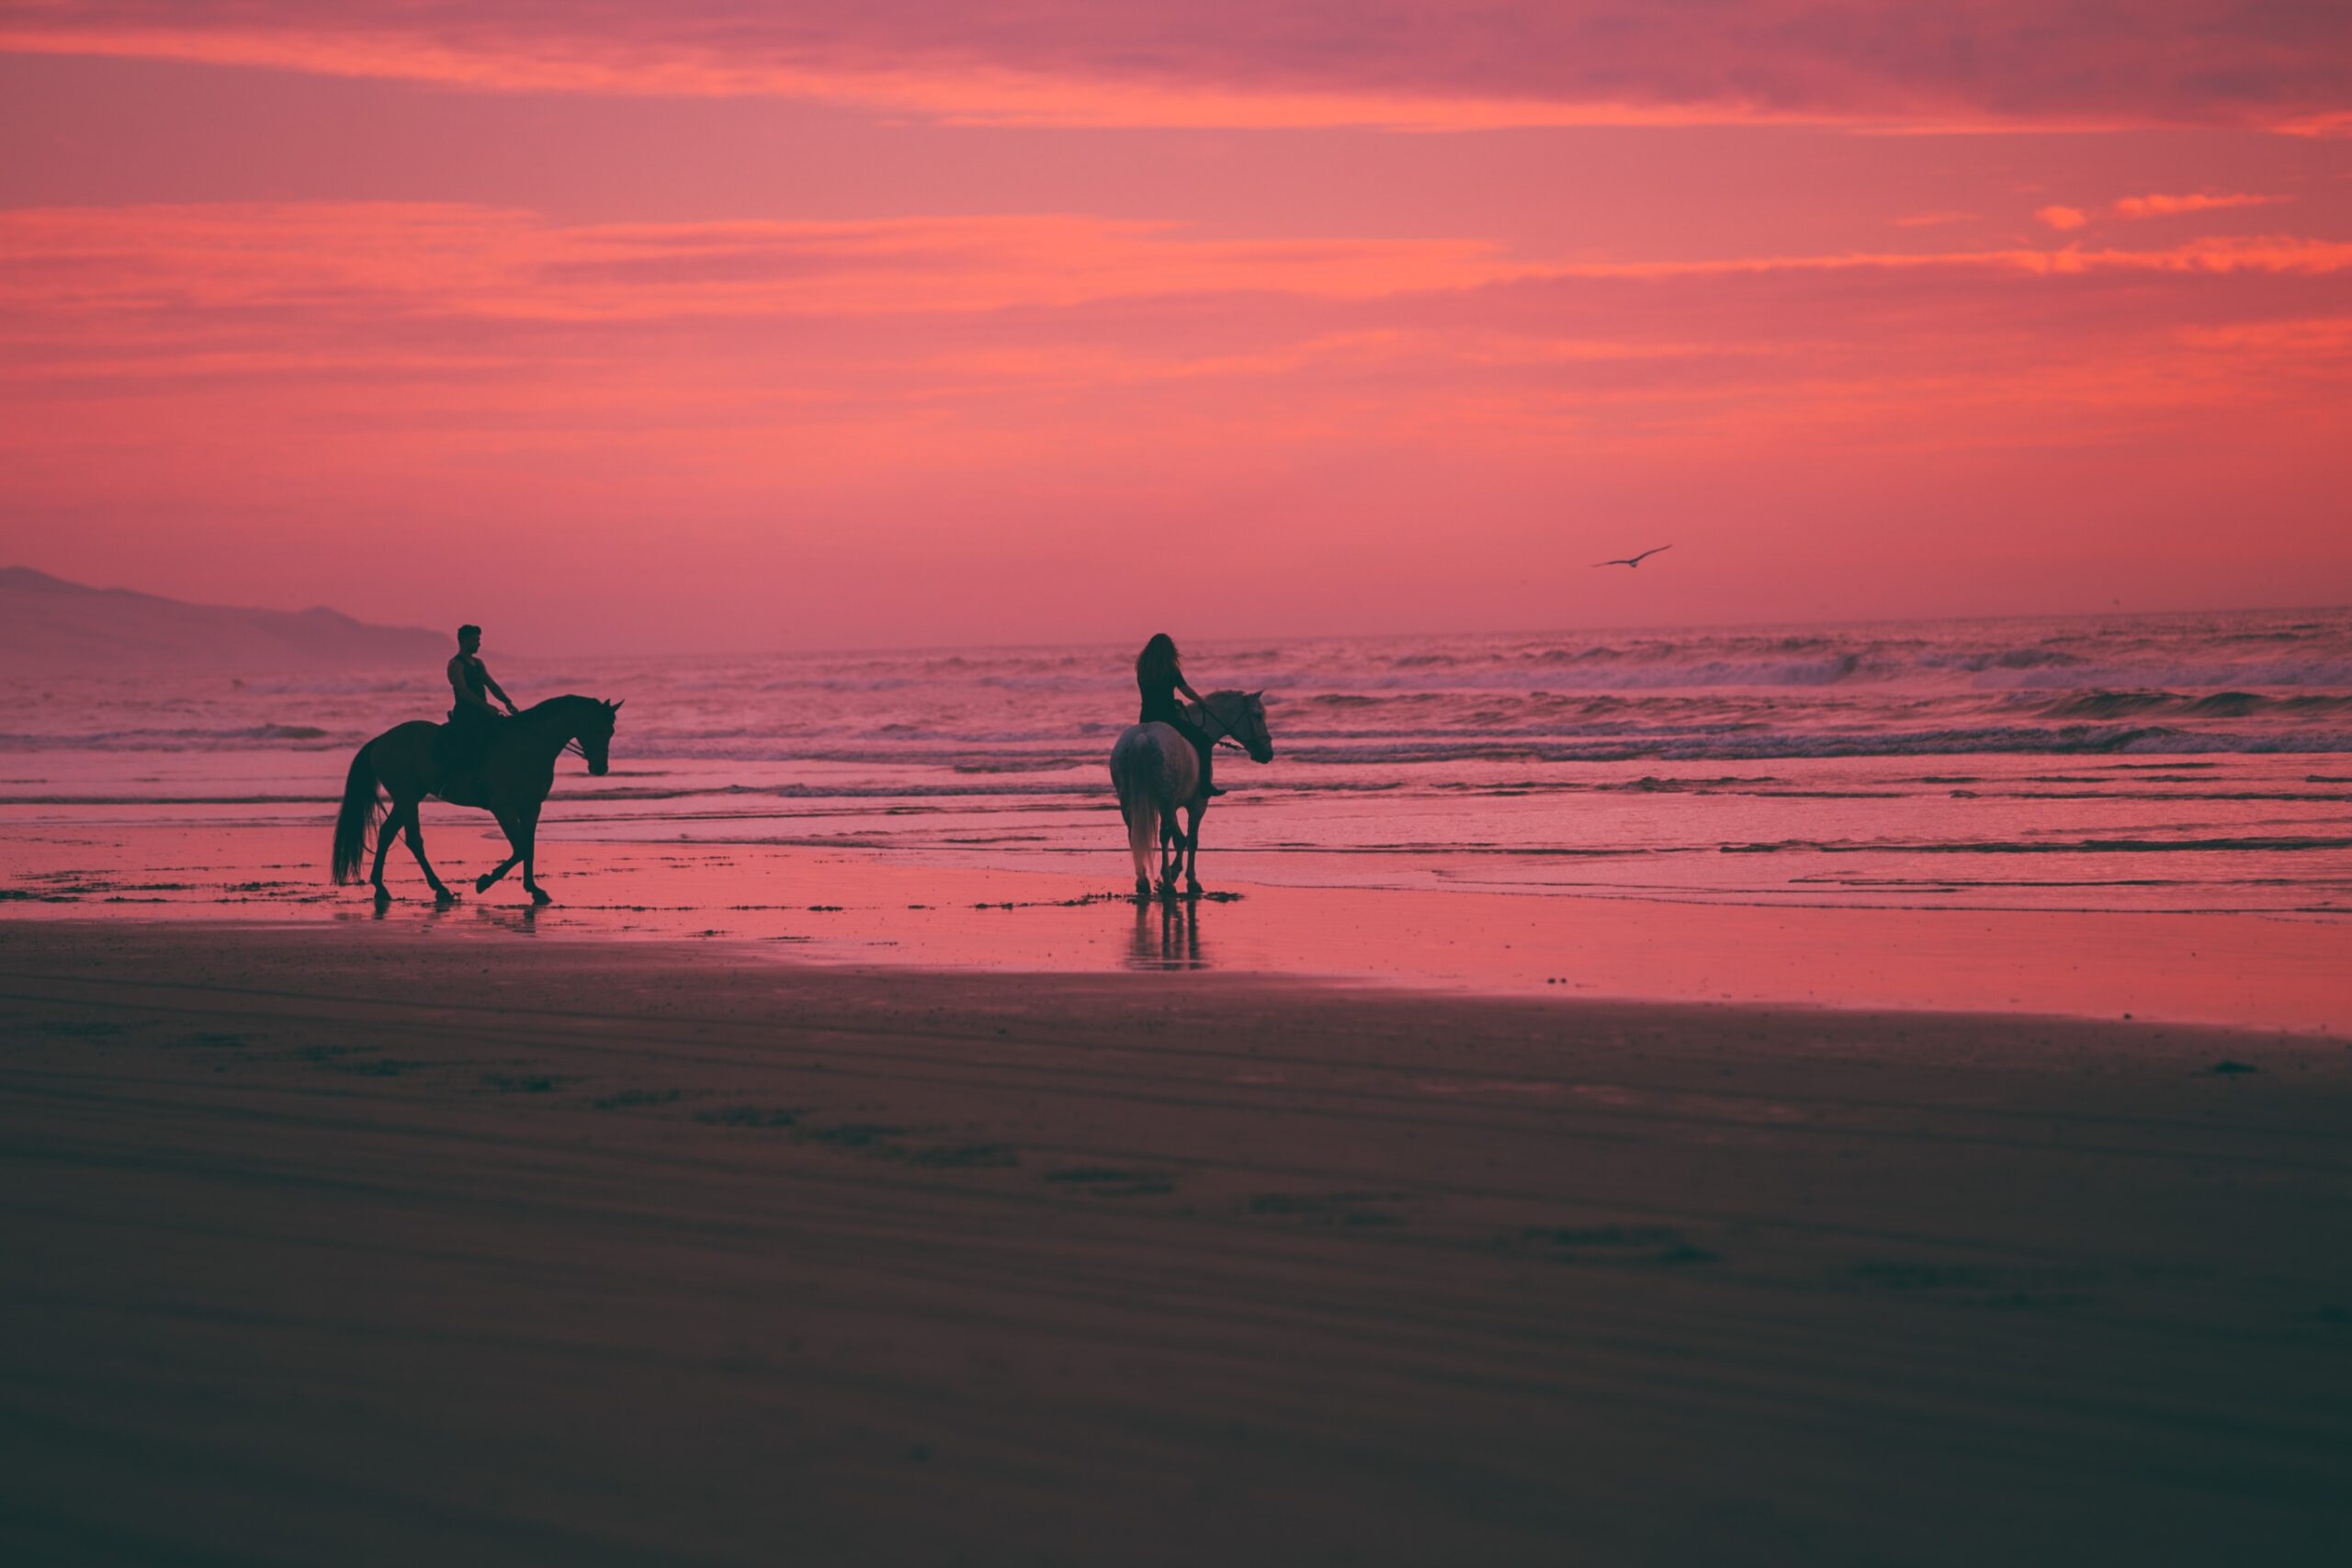 Two Horseback riders on a beautiful crimson sunset in Costa Rica